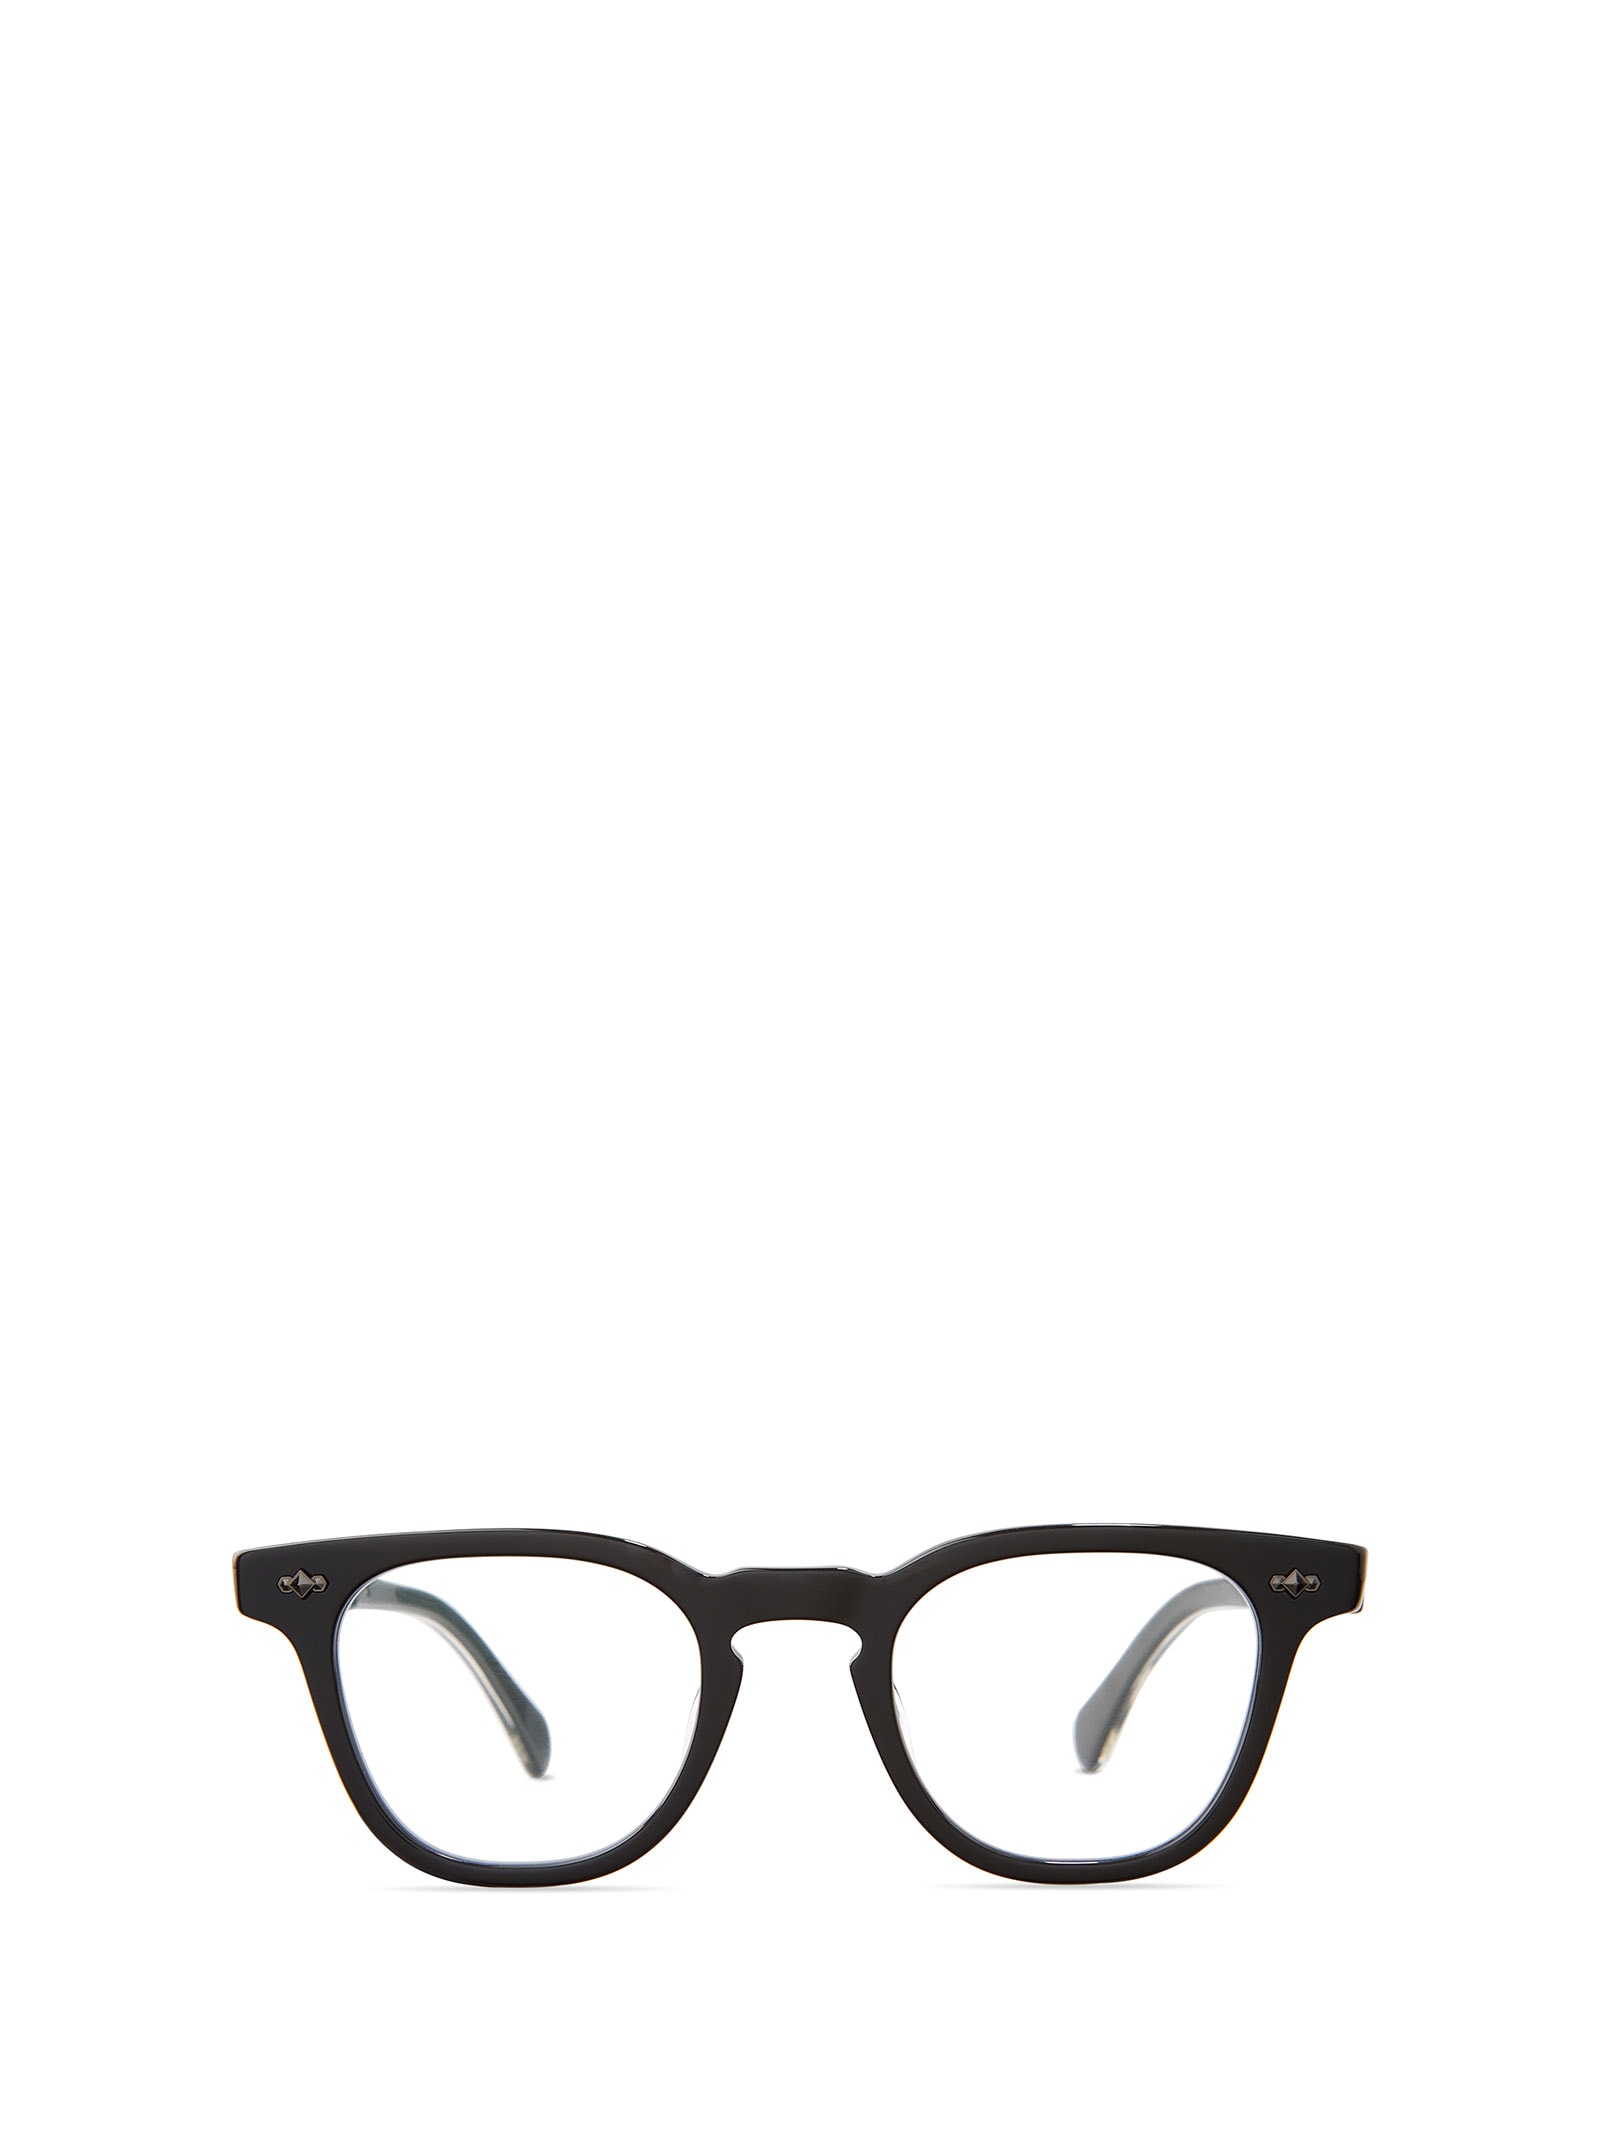 Dean C 44 Black-pewter Glasses